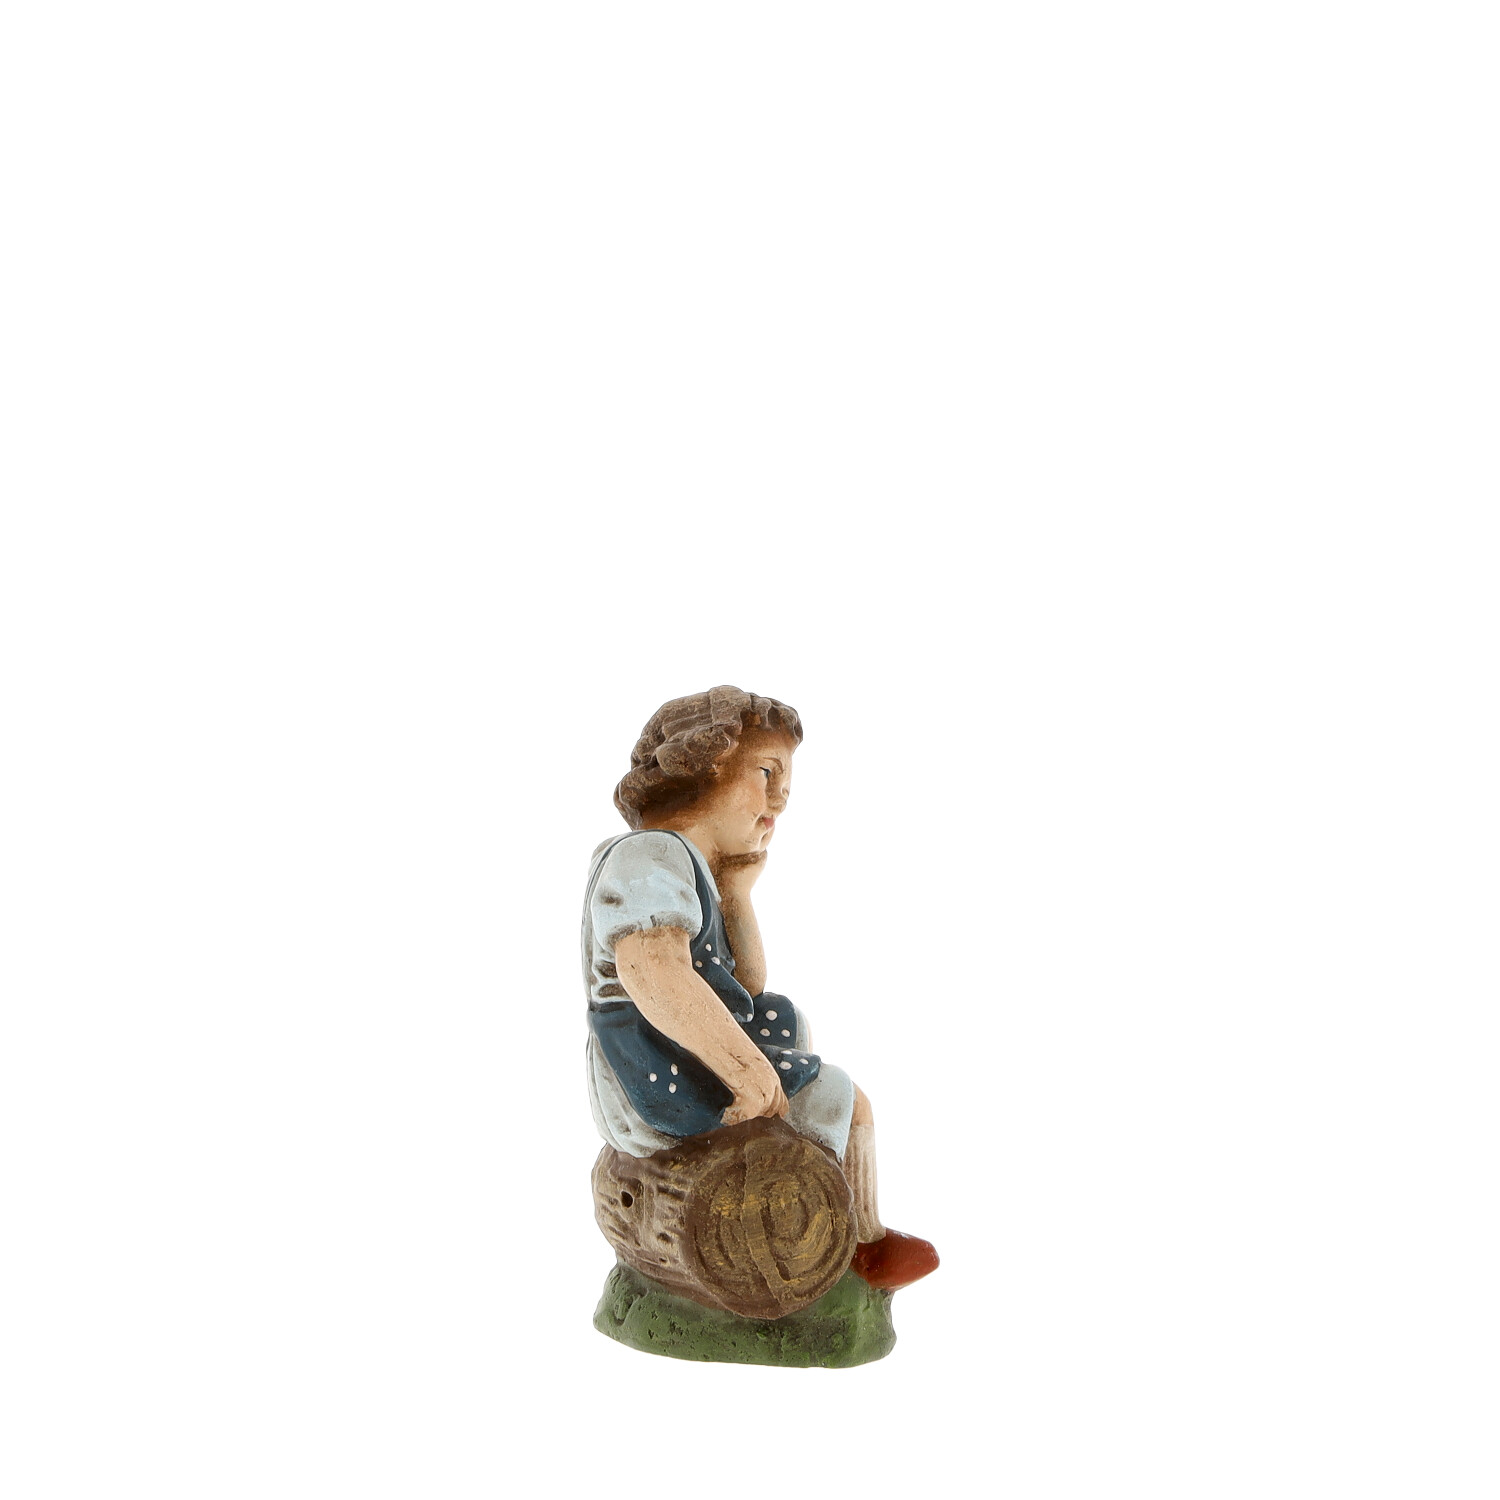 Sitting girl - Marolin Nativity figure - made in Germany